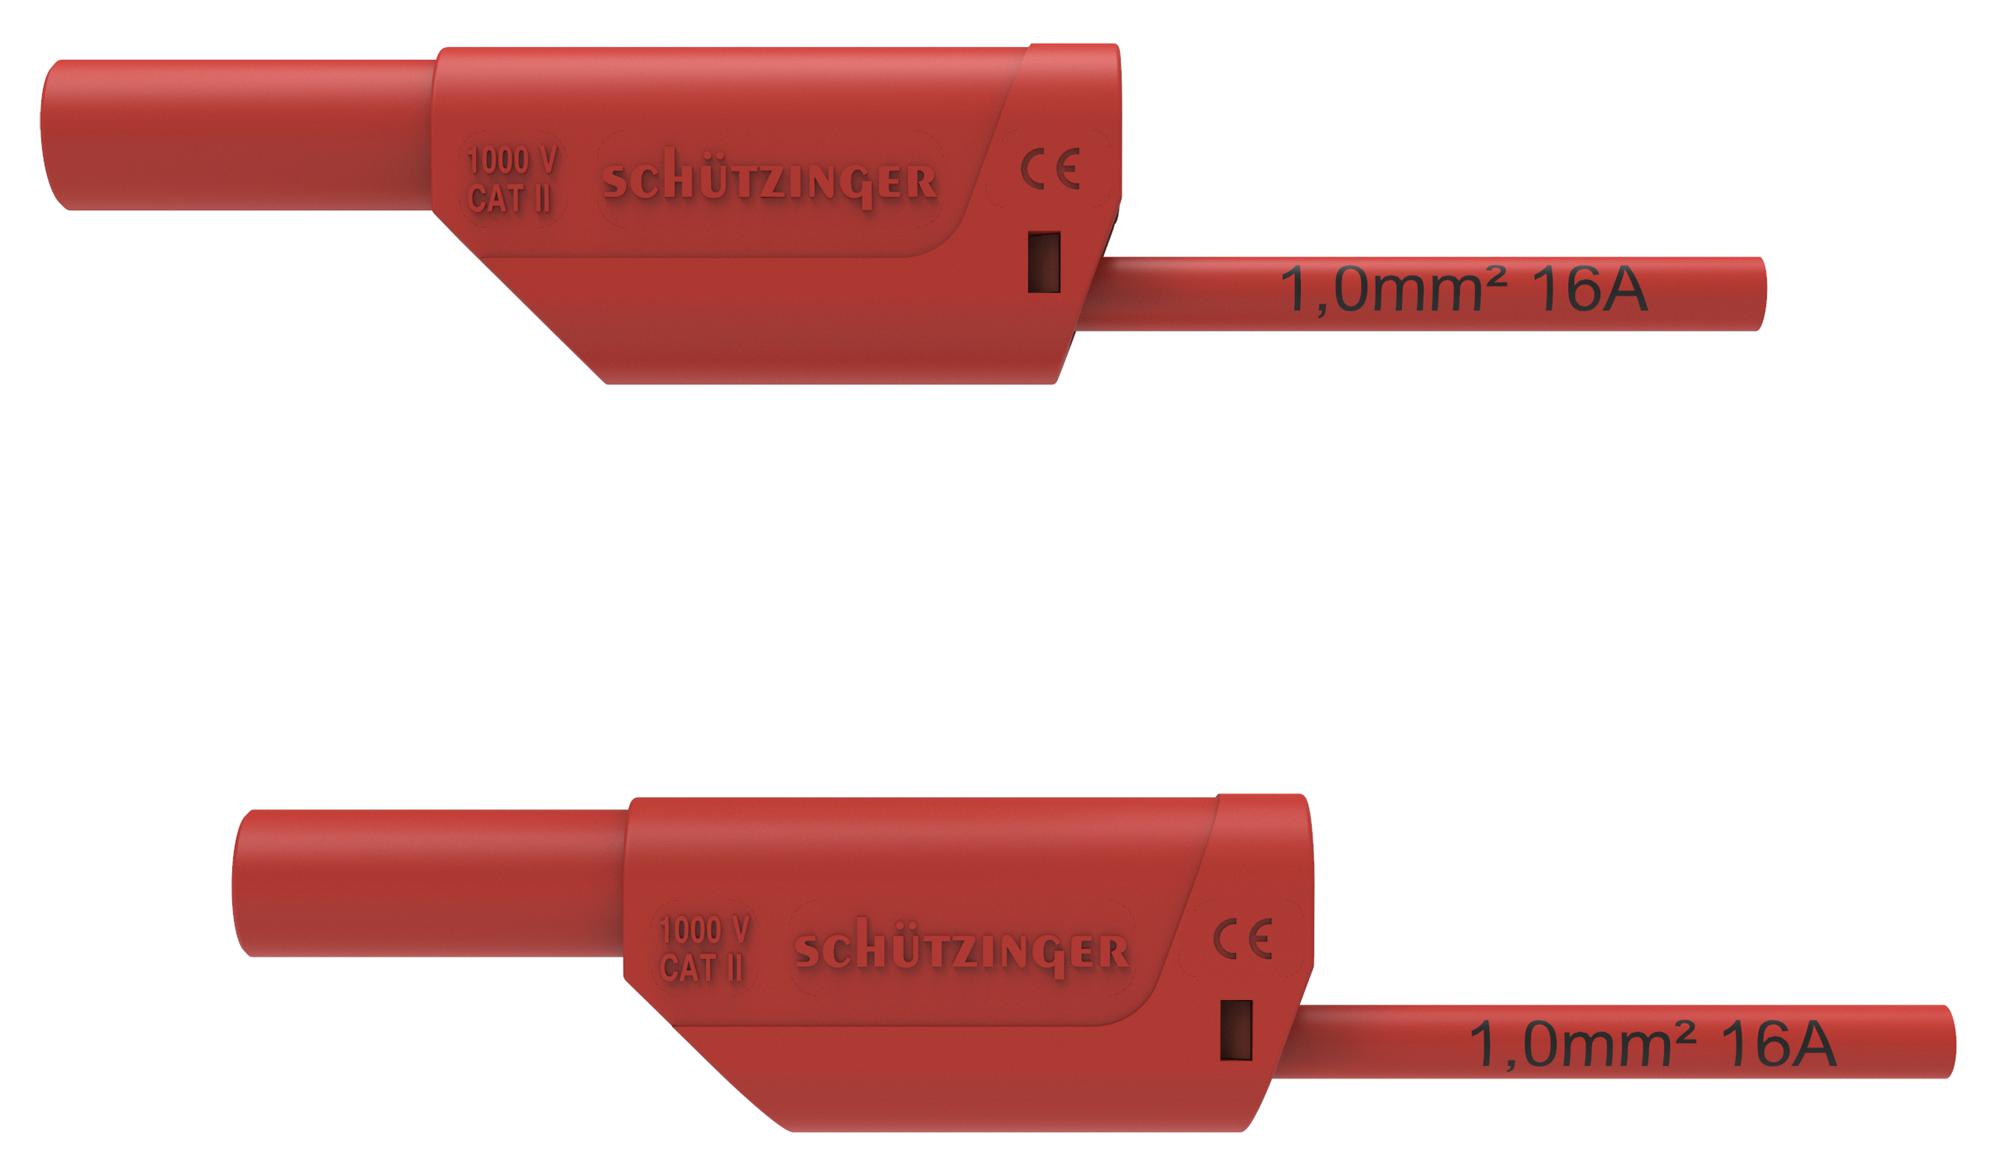 Schutzinger Di Vsfk 8500 / 1 / 100 / Rt 4mm Banana Plug-Sq, Shrouded, Red, 1M